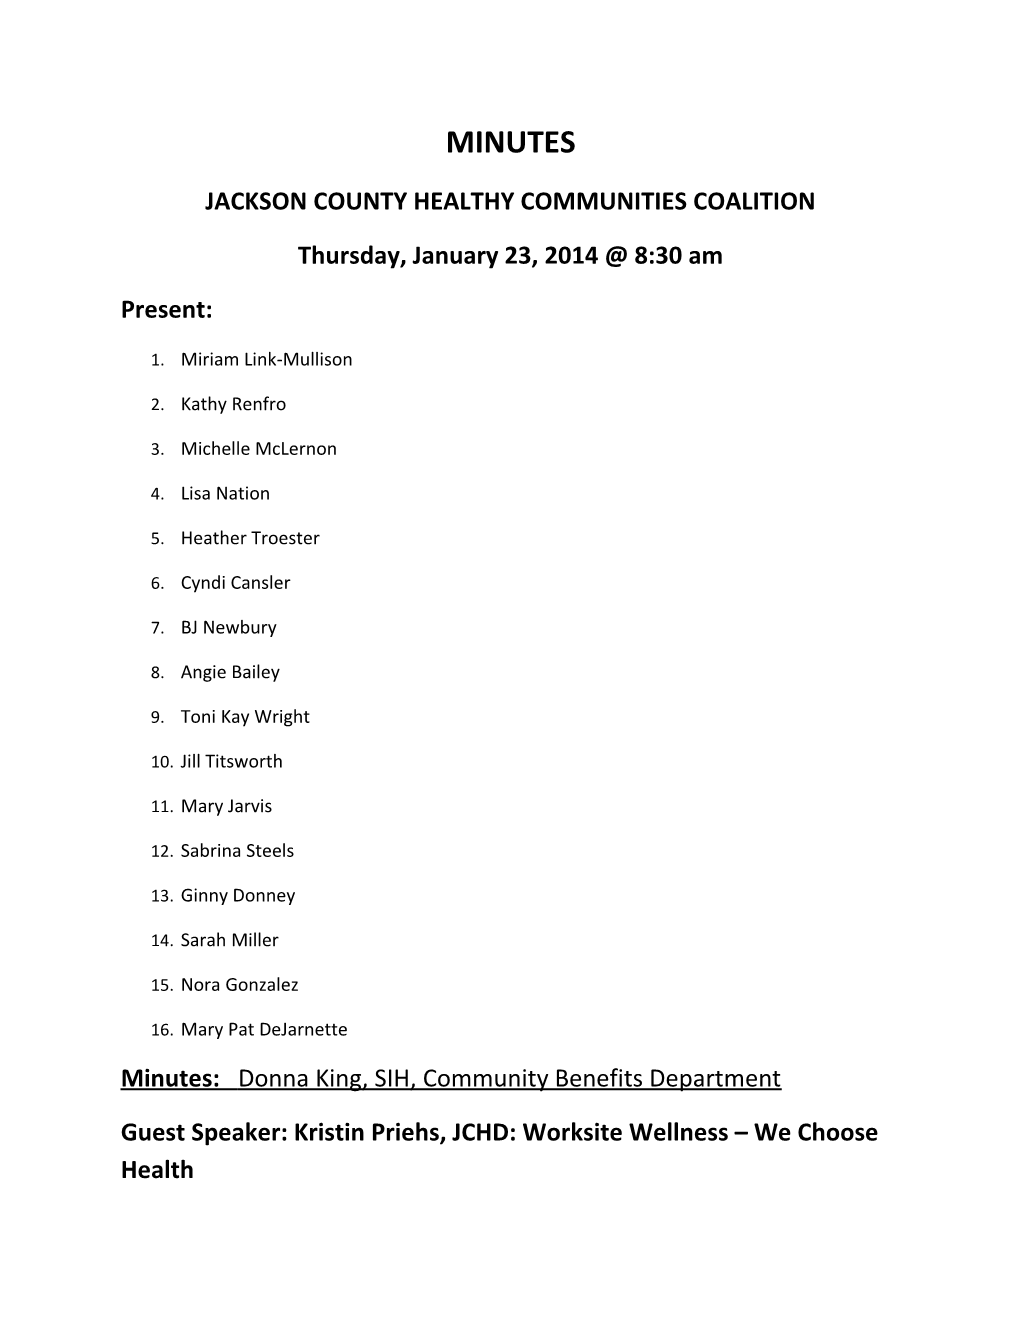 Jackson County Healthy Communities Coalition